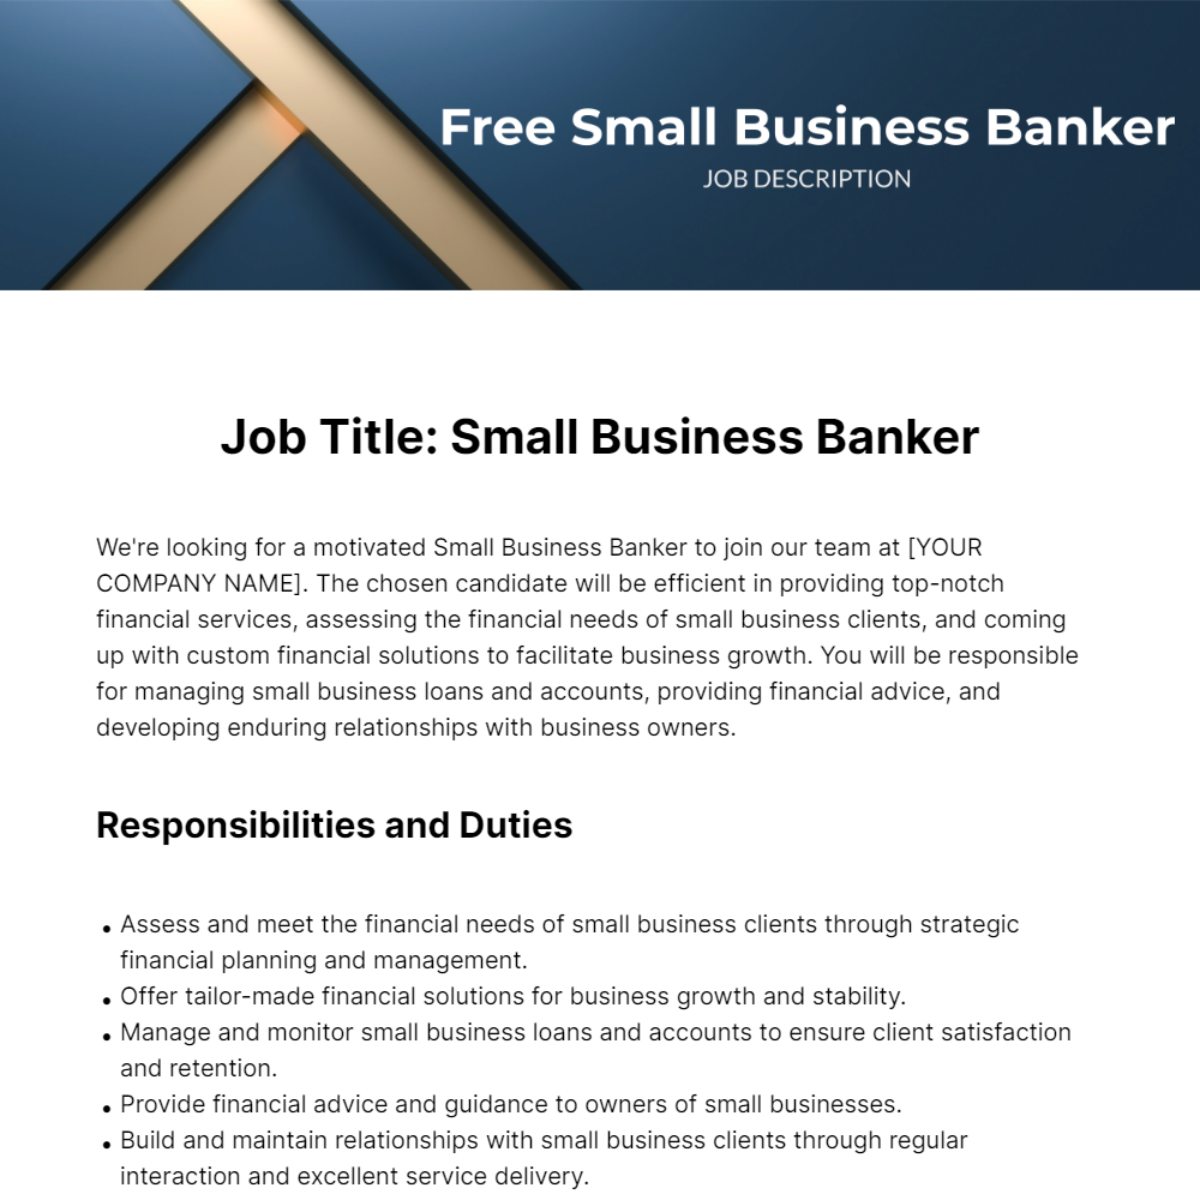 Free Small Business Banker Job Description Template